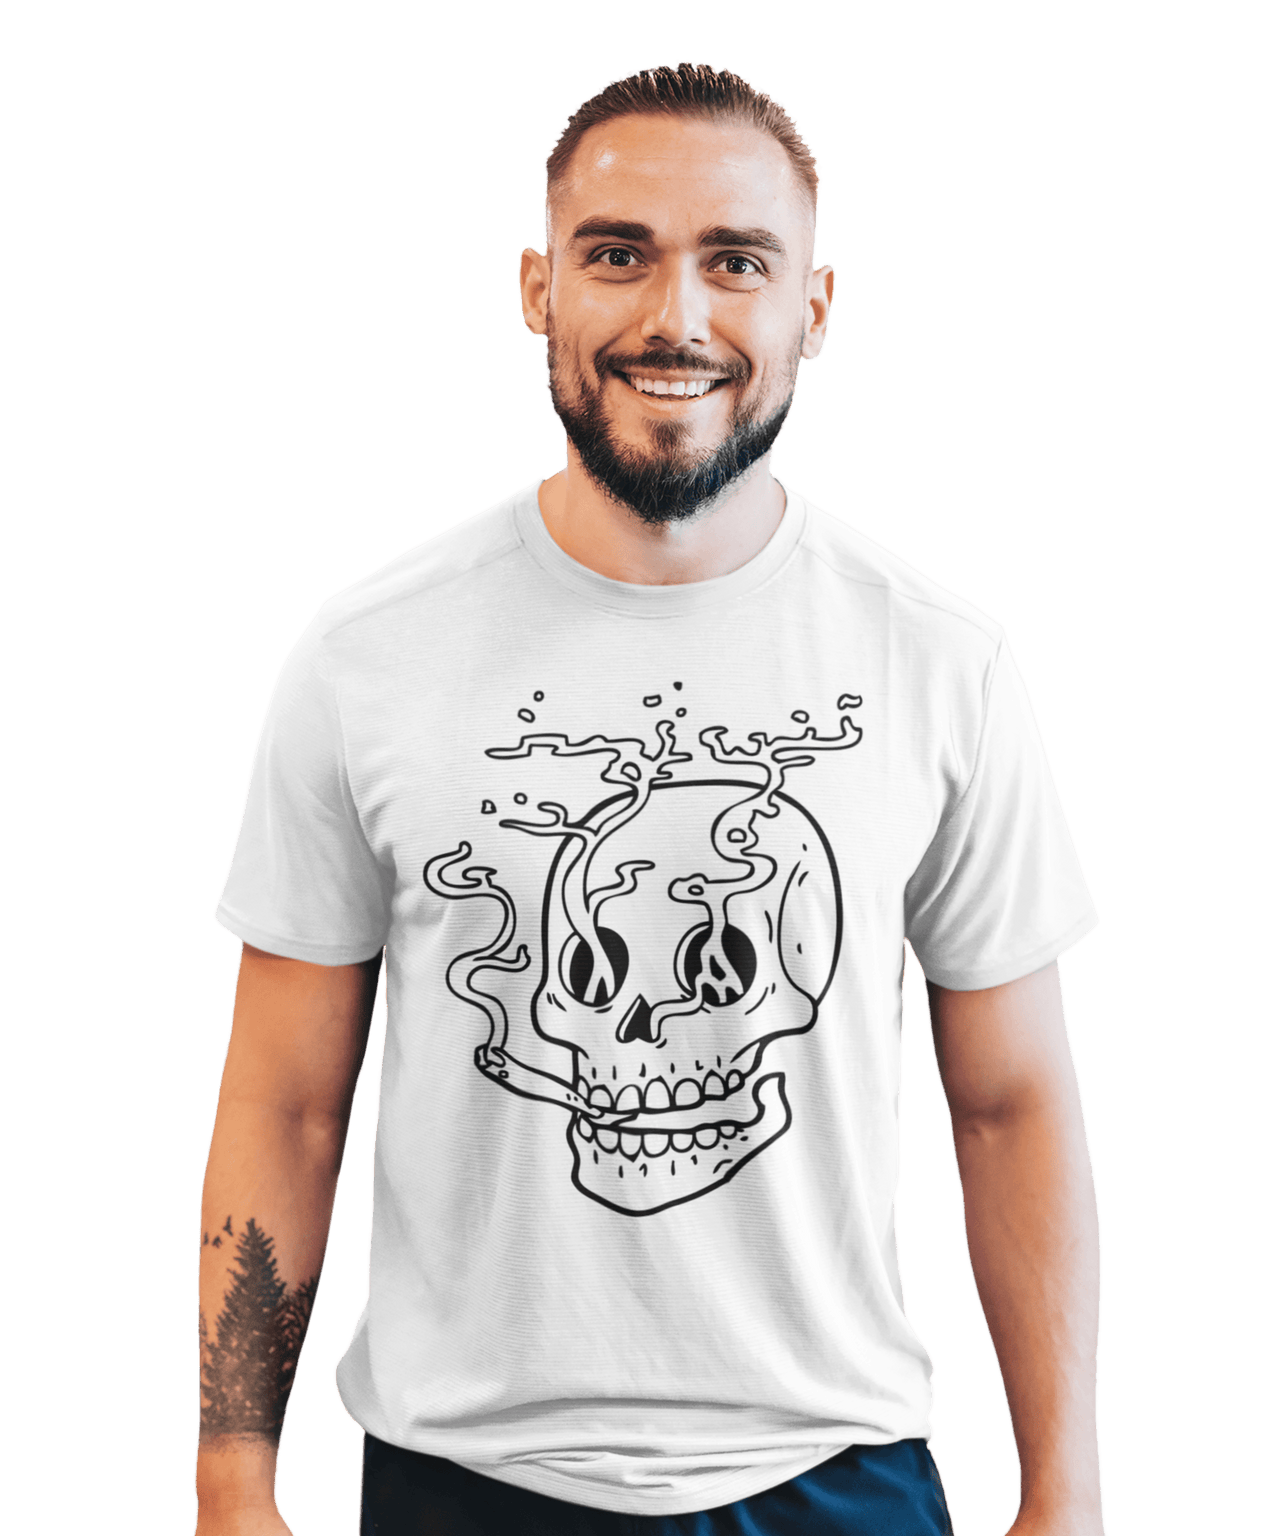 Smoking Skull Tattoo Design Adult Unisex Unisex T-Shirt For Men And Women 8Ball